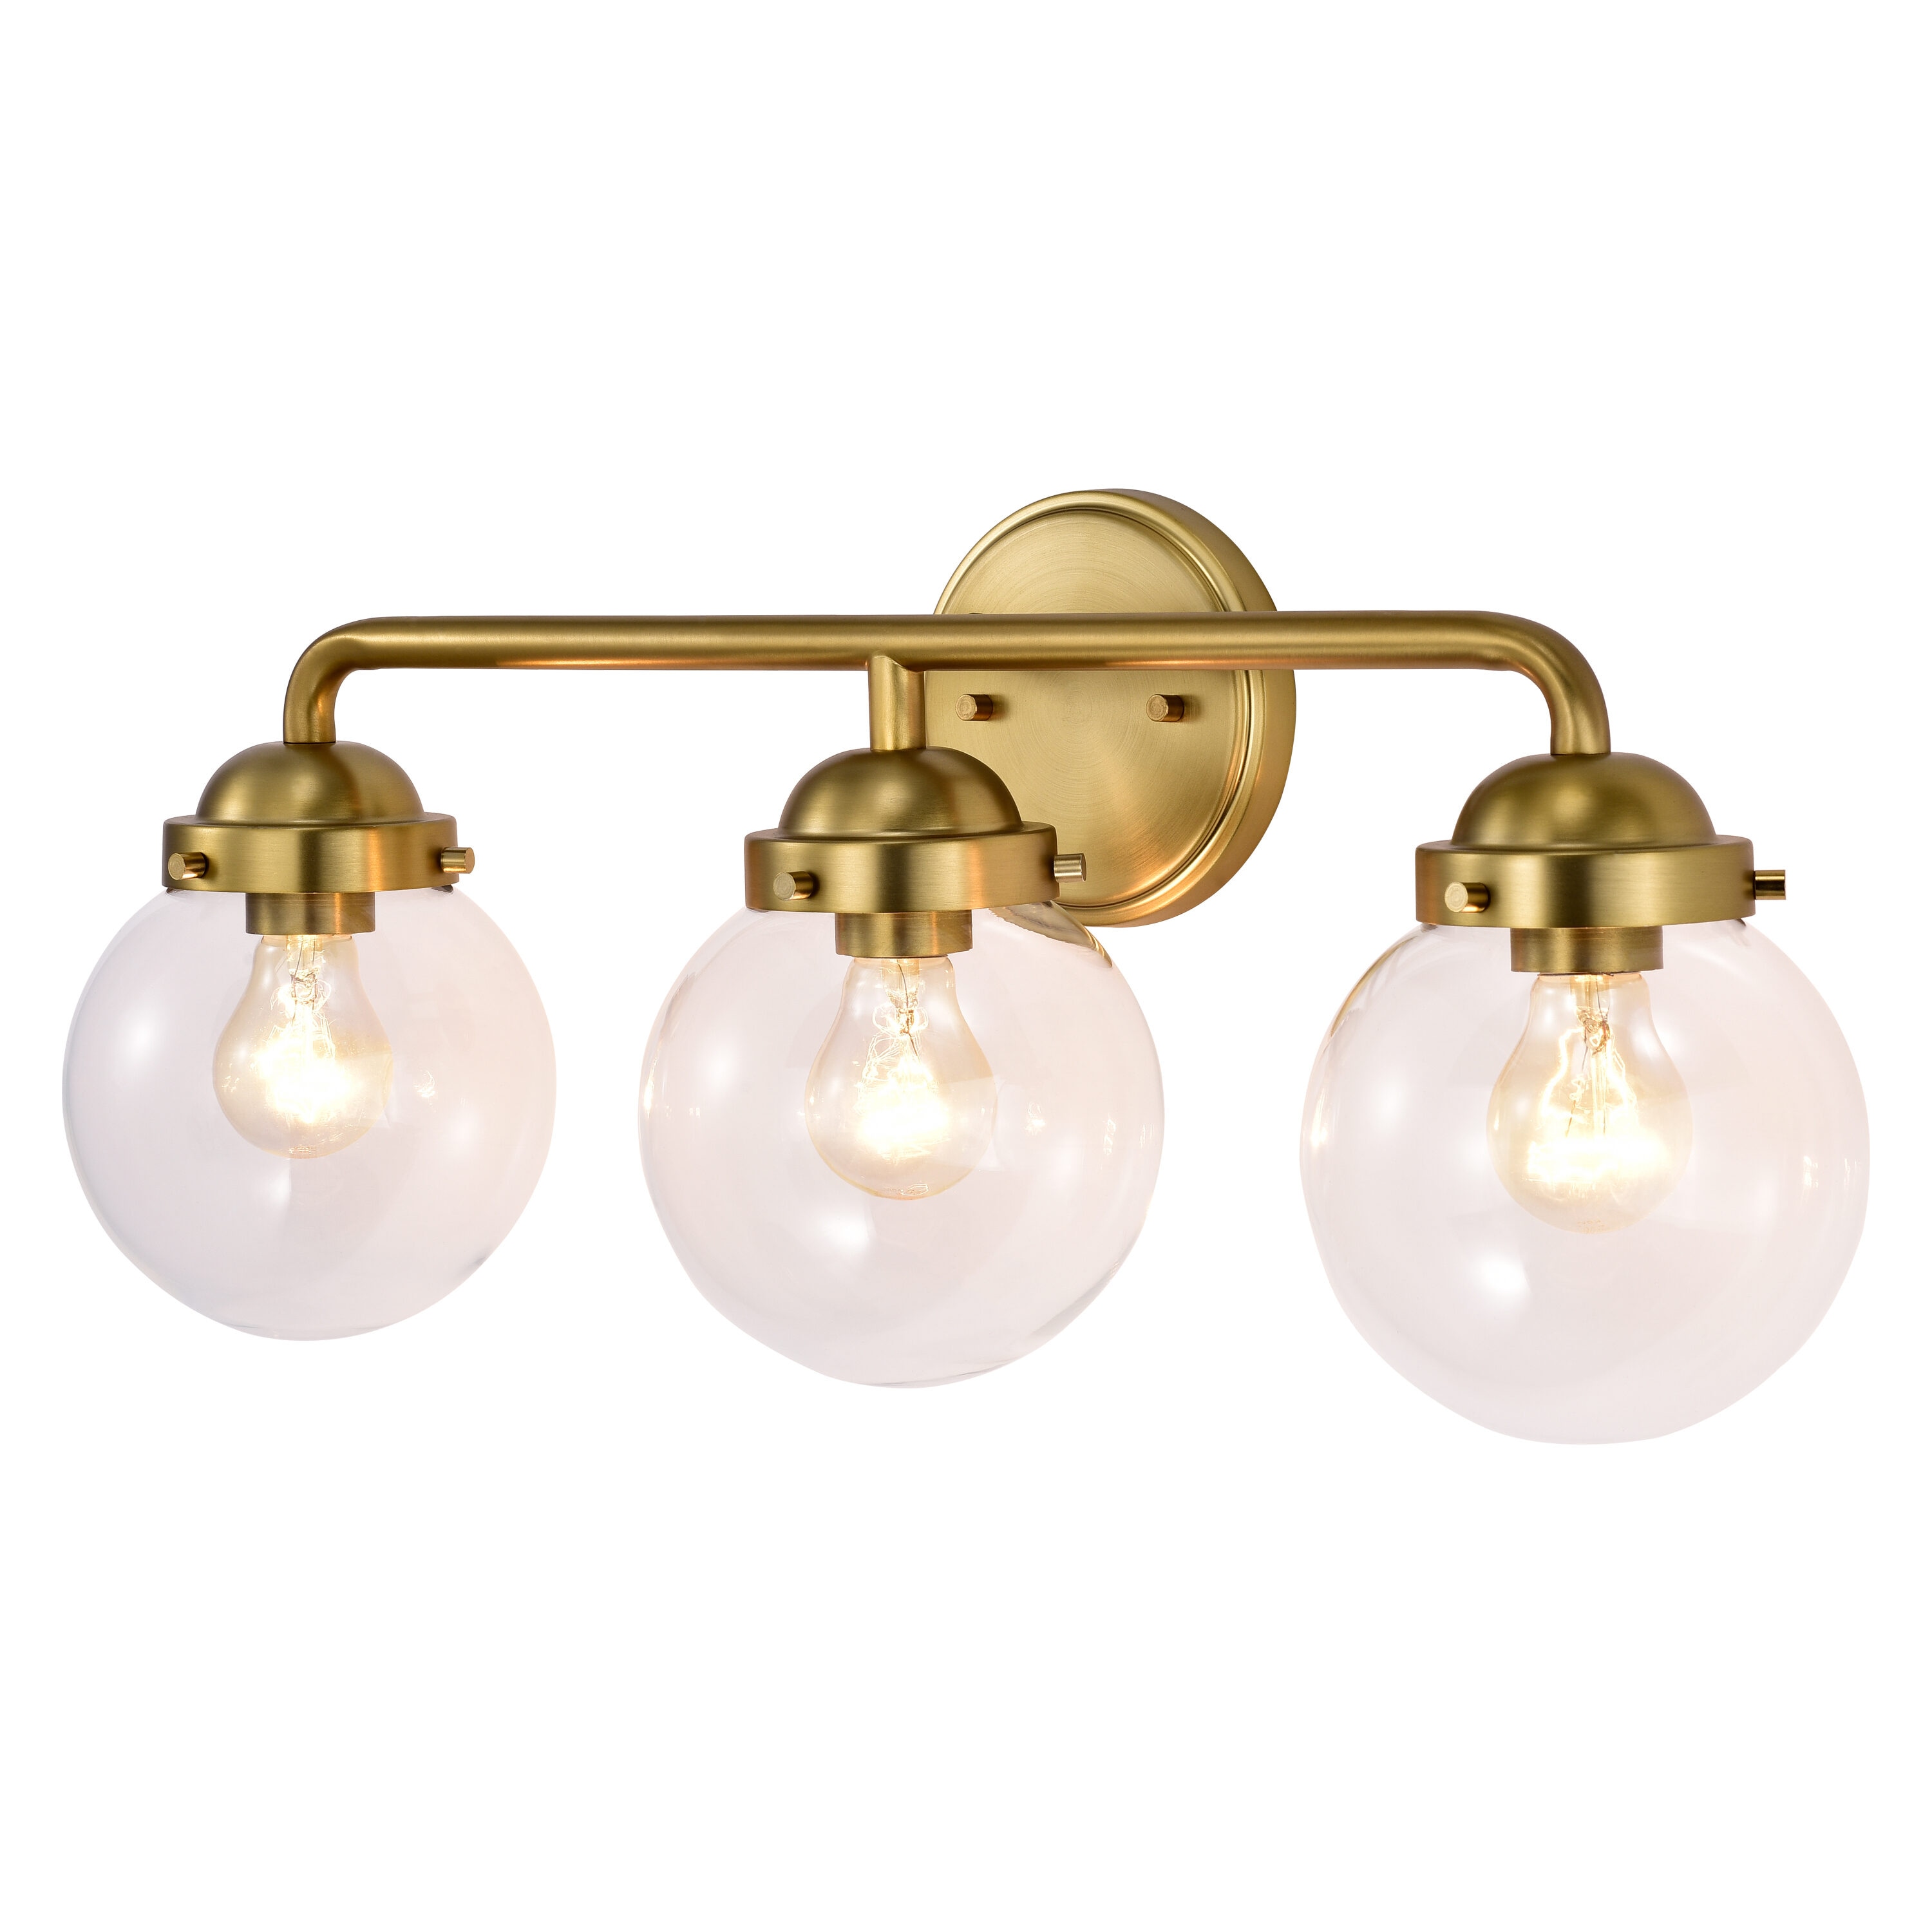 C Cattleya 7.25-in 3-Light Antique Brass Mid-century Vanity Light in ...